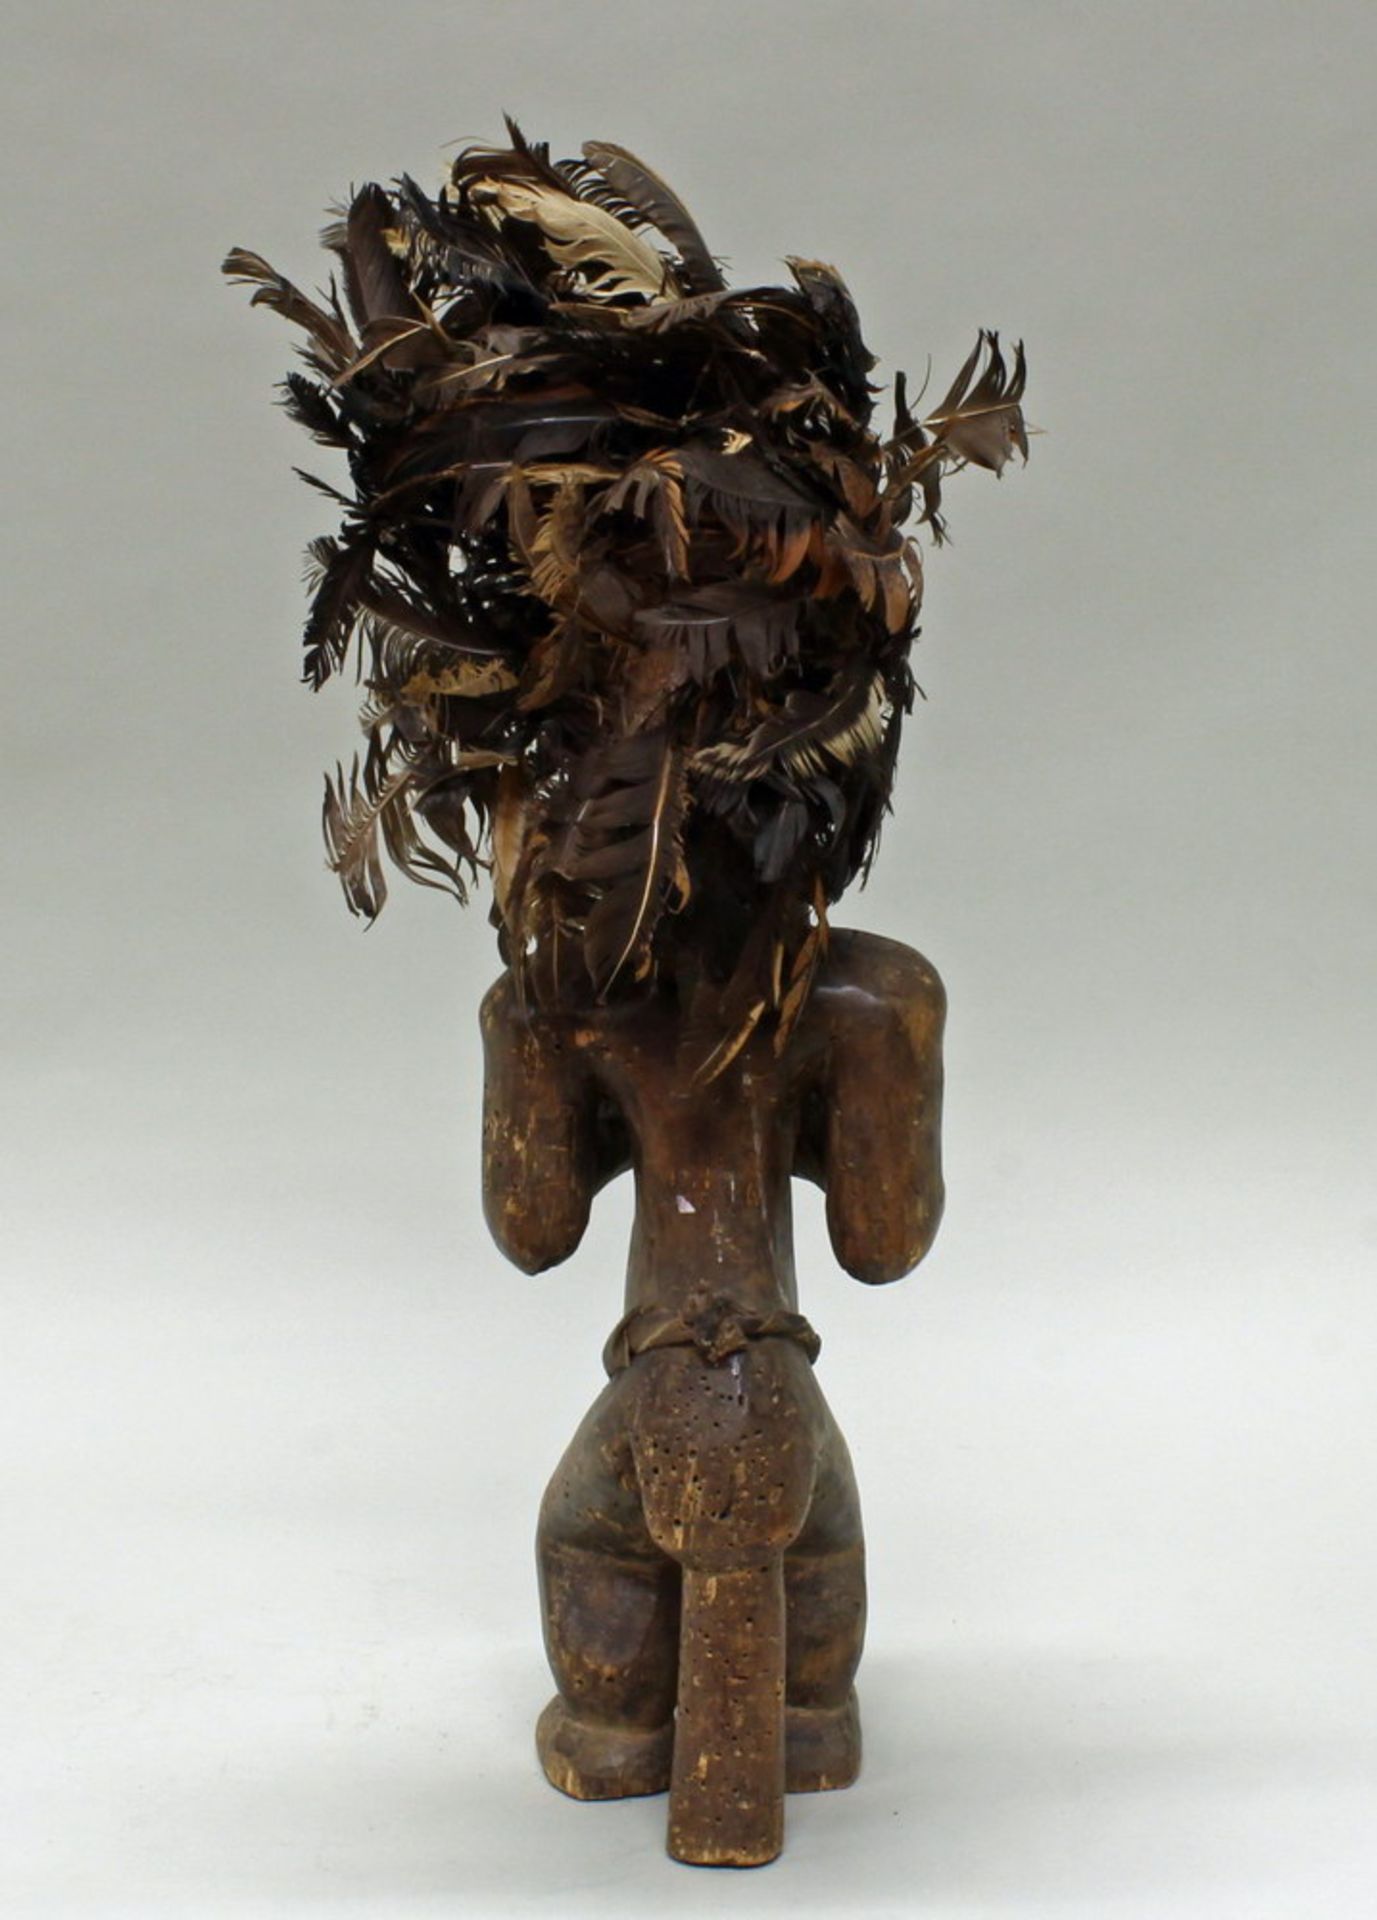 Sitzende Figur, mit Federschmuck, Fang, Afrika, Holz, ca. 50 cm hoch. Provenienz: Privatsammlung - Bild 3 aus 4